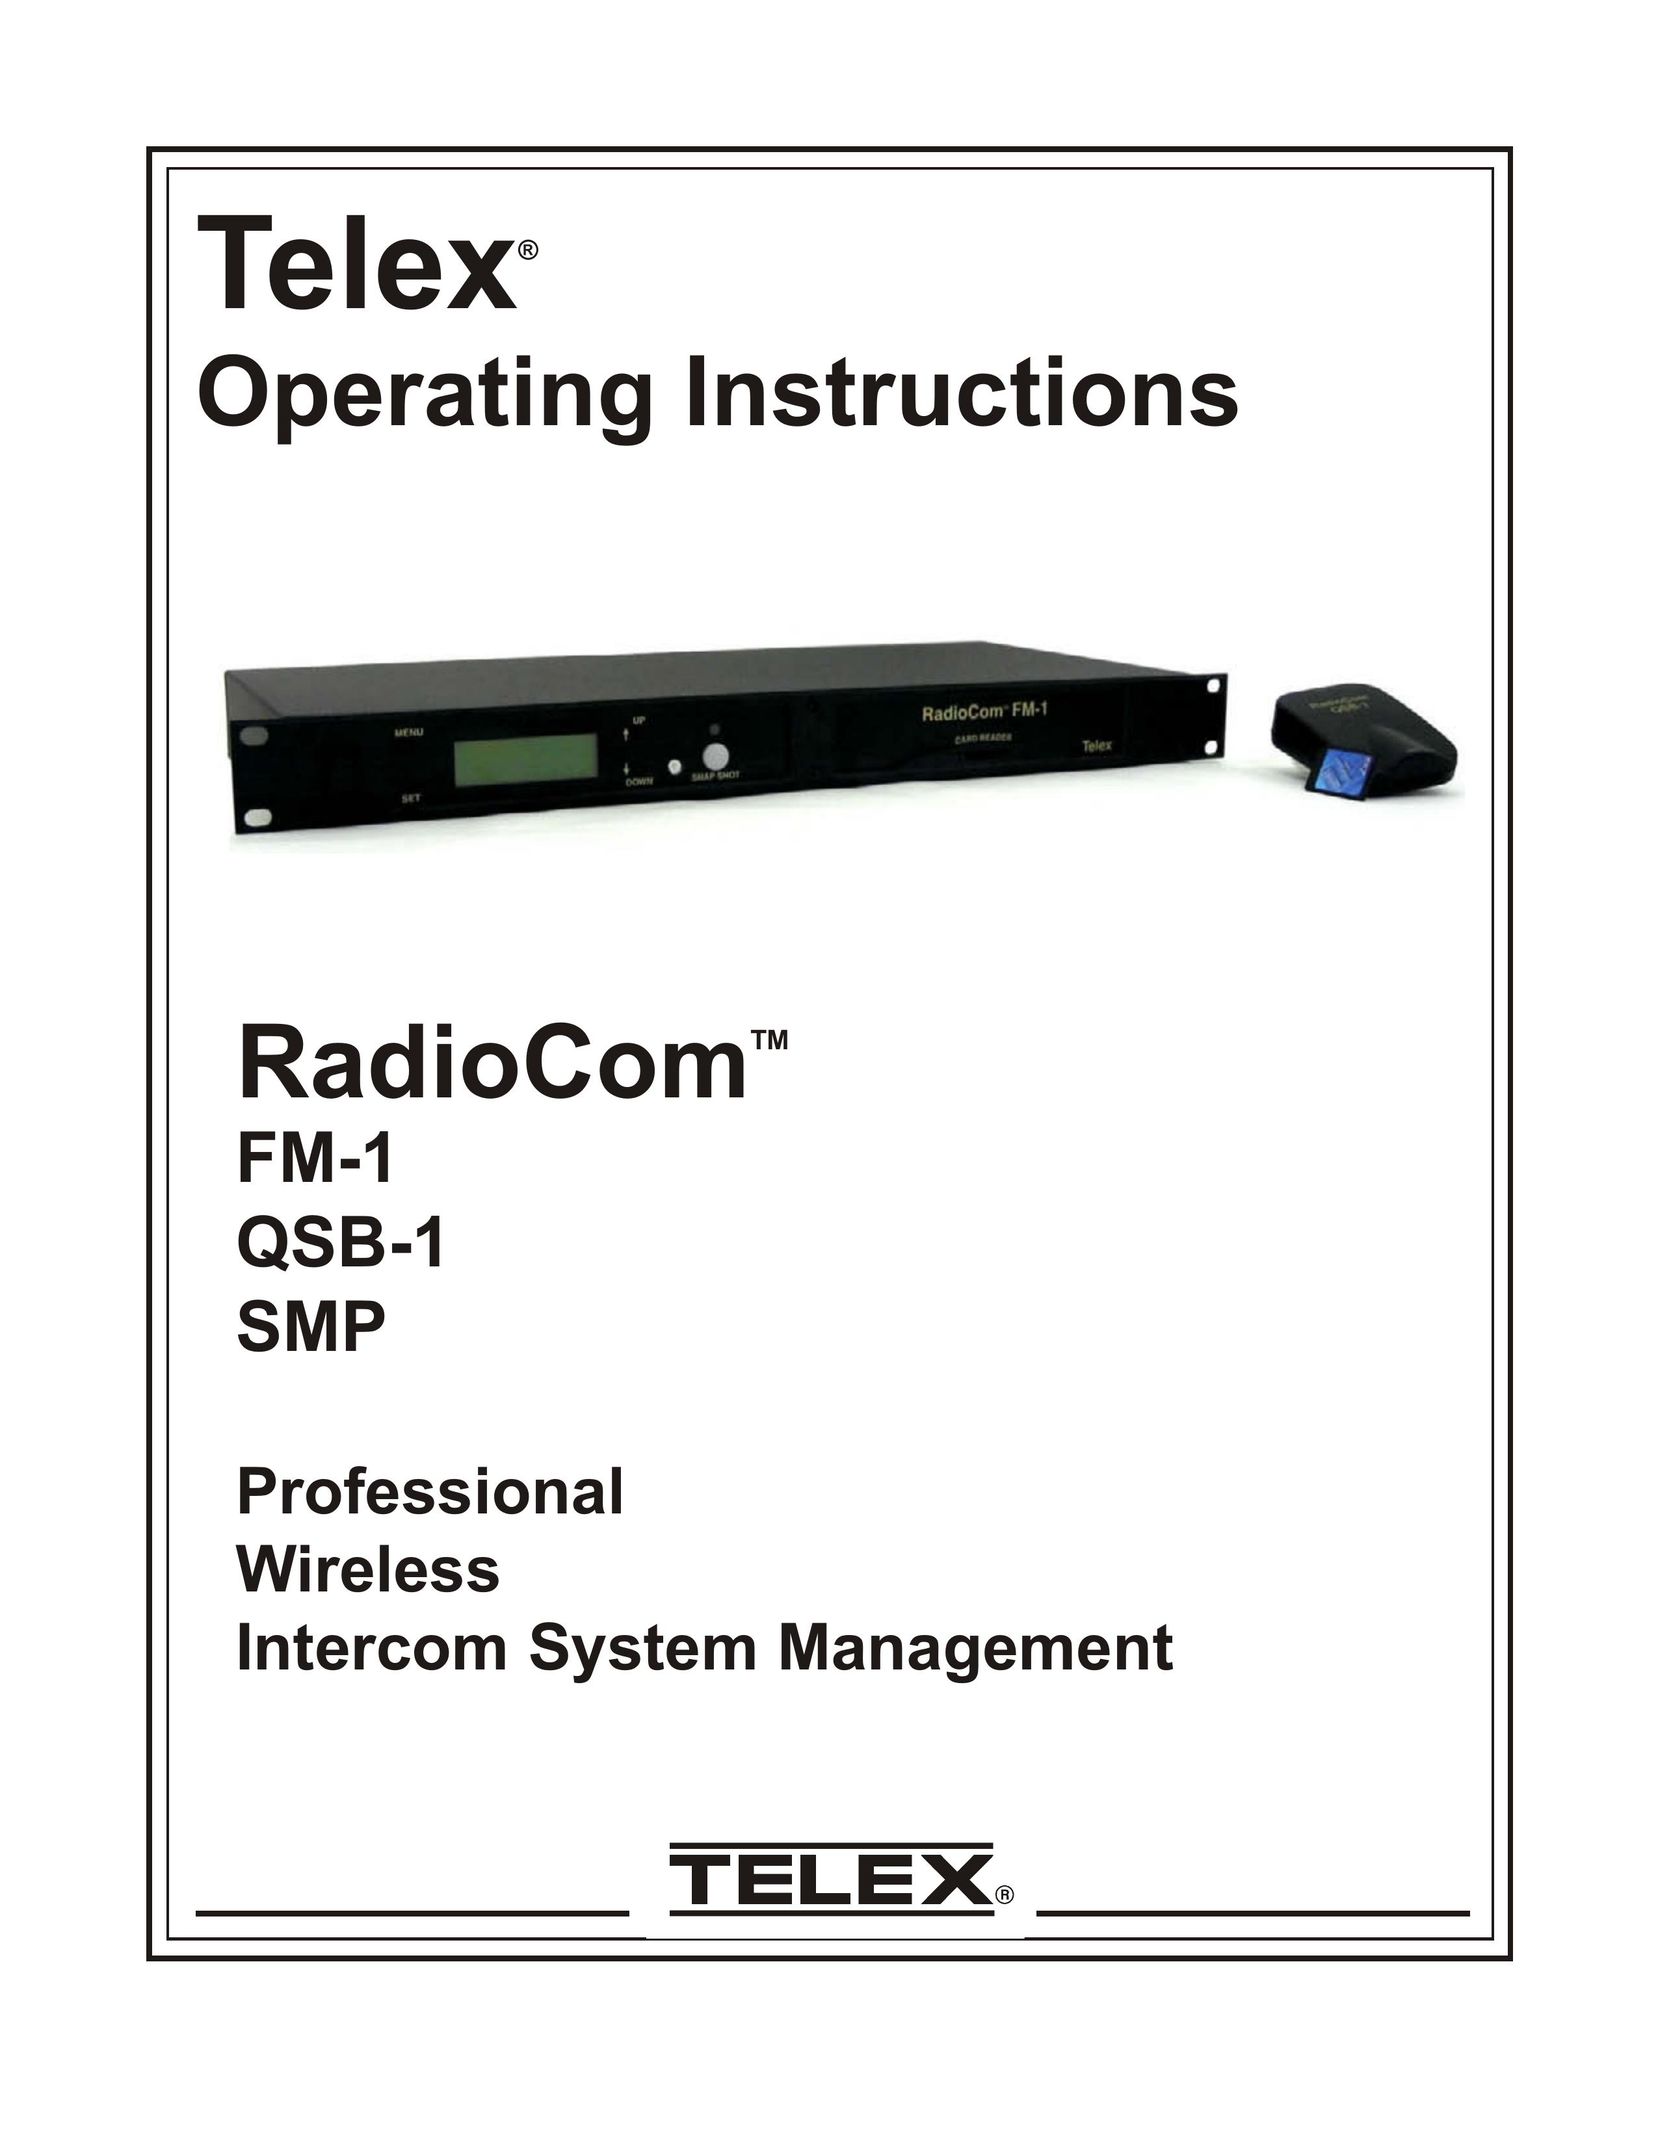 Telex FM-1 Car Stereo System User Manual